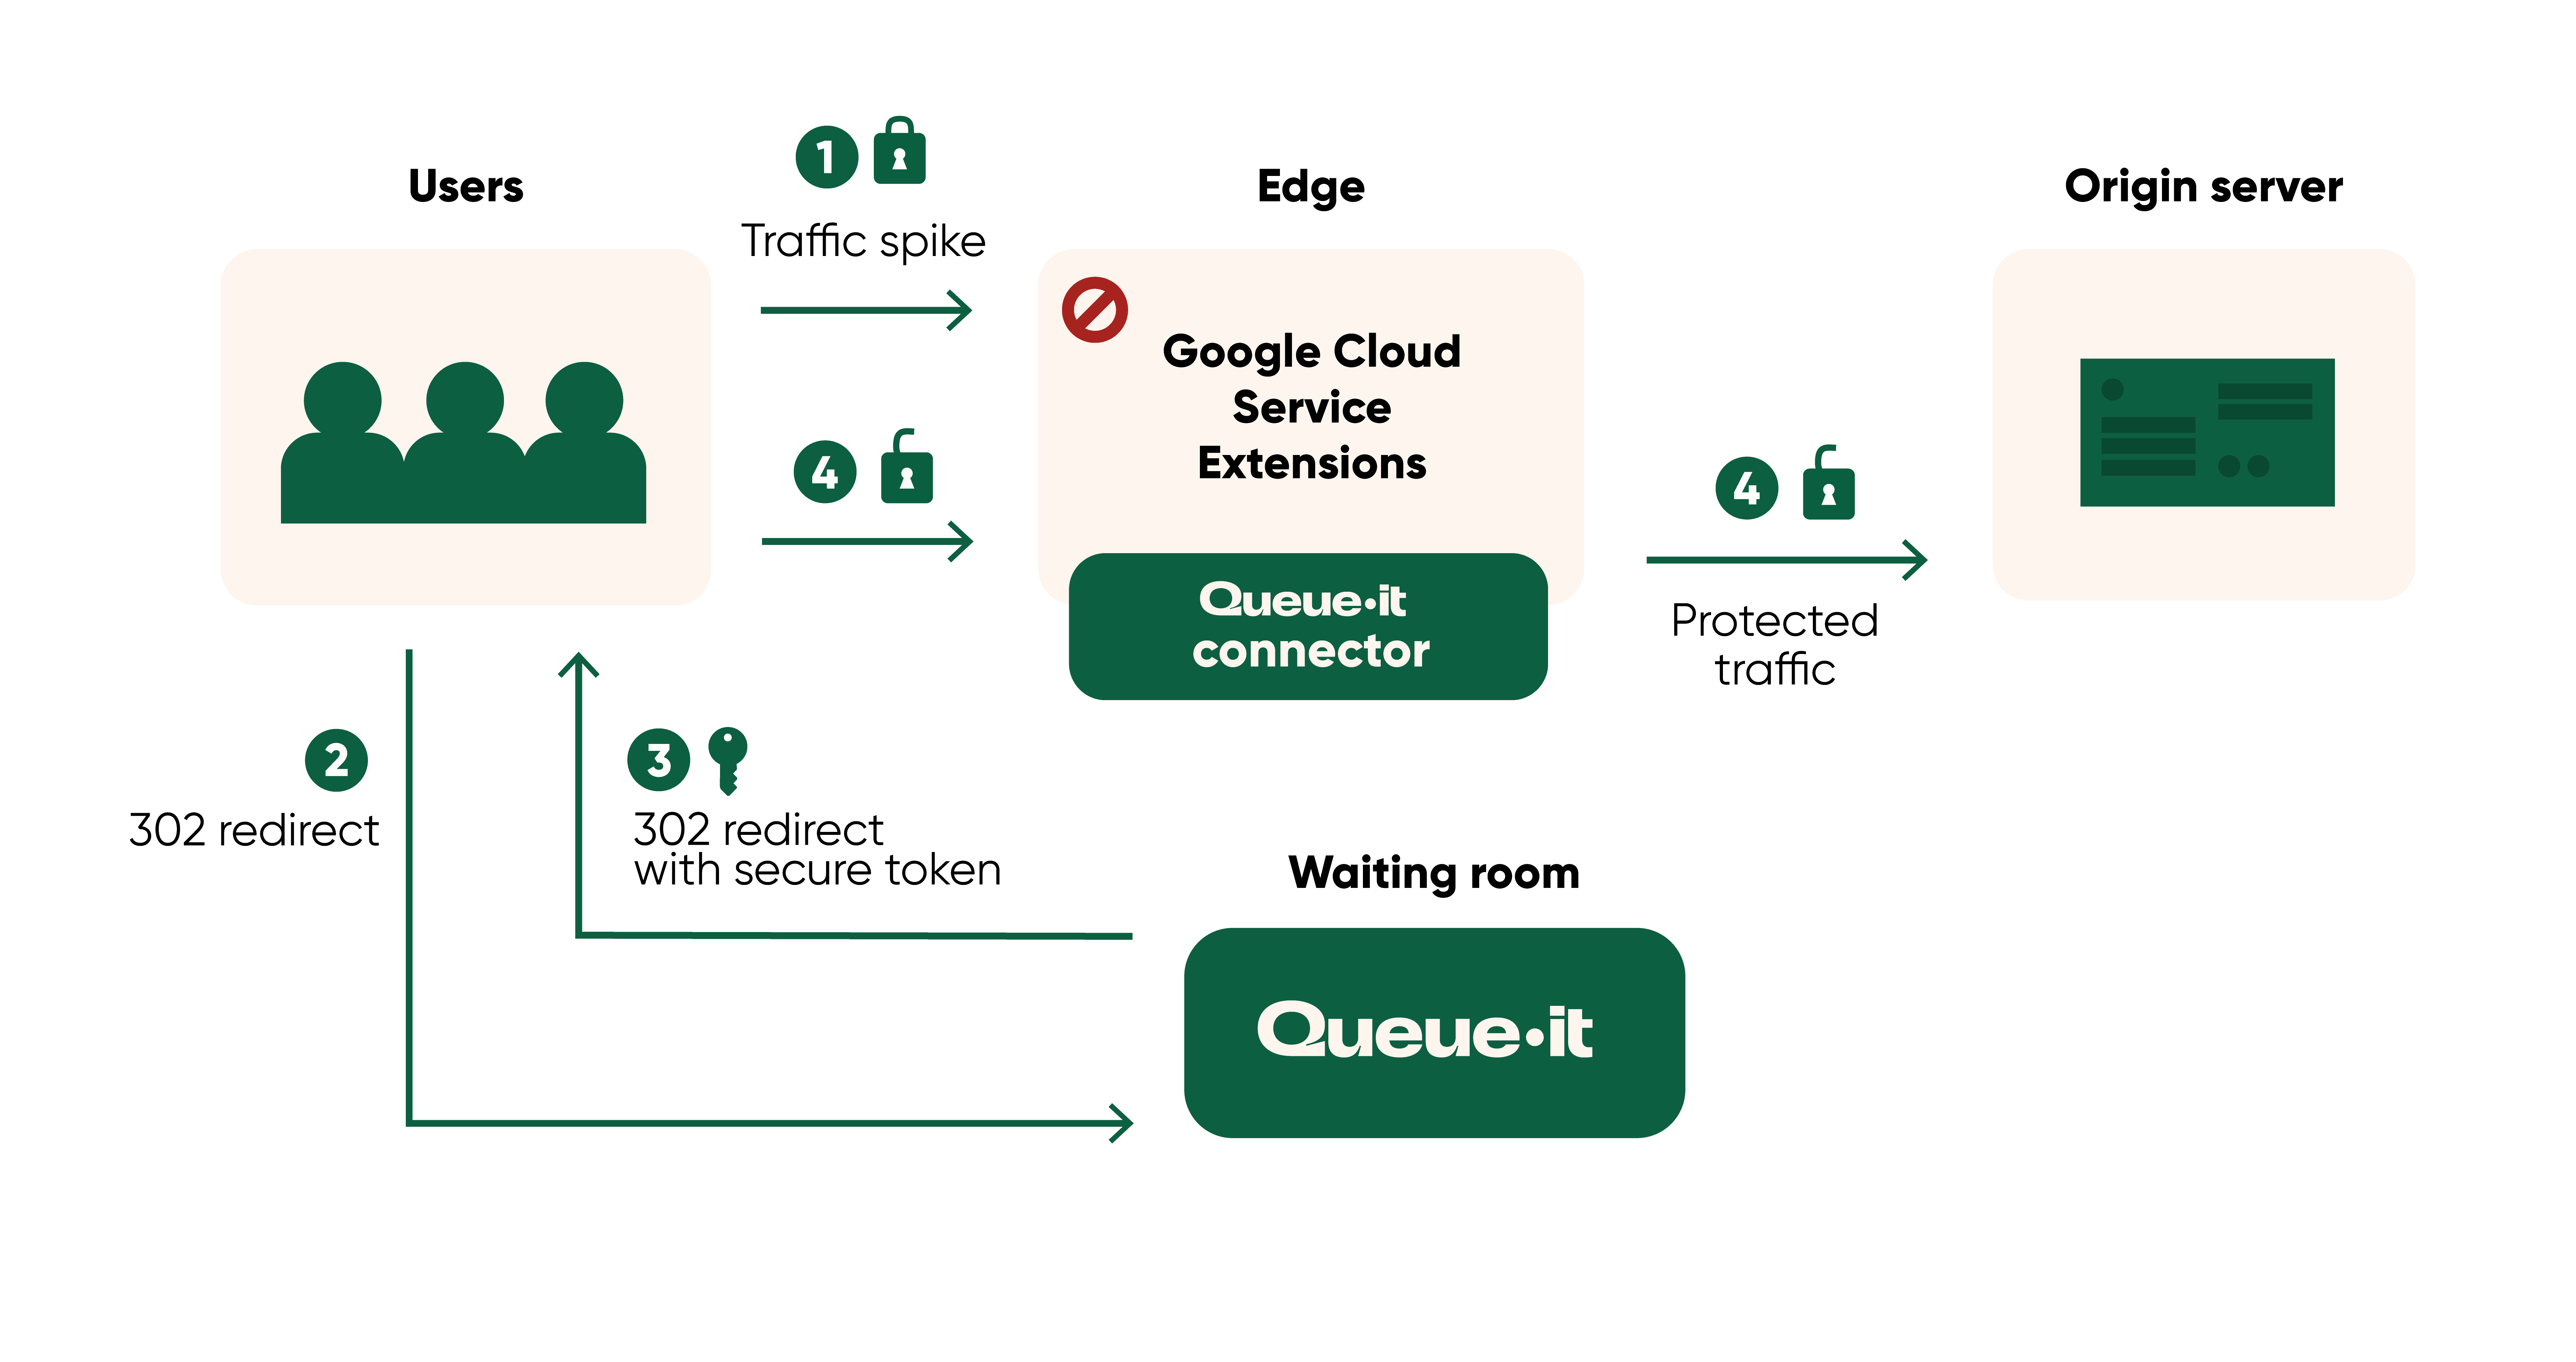 Google Cloud and Queue-it connector